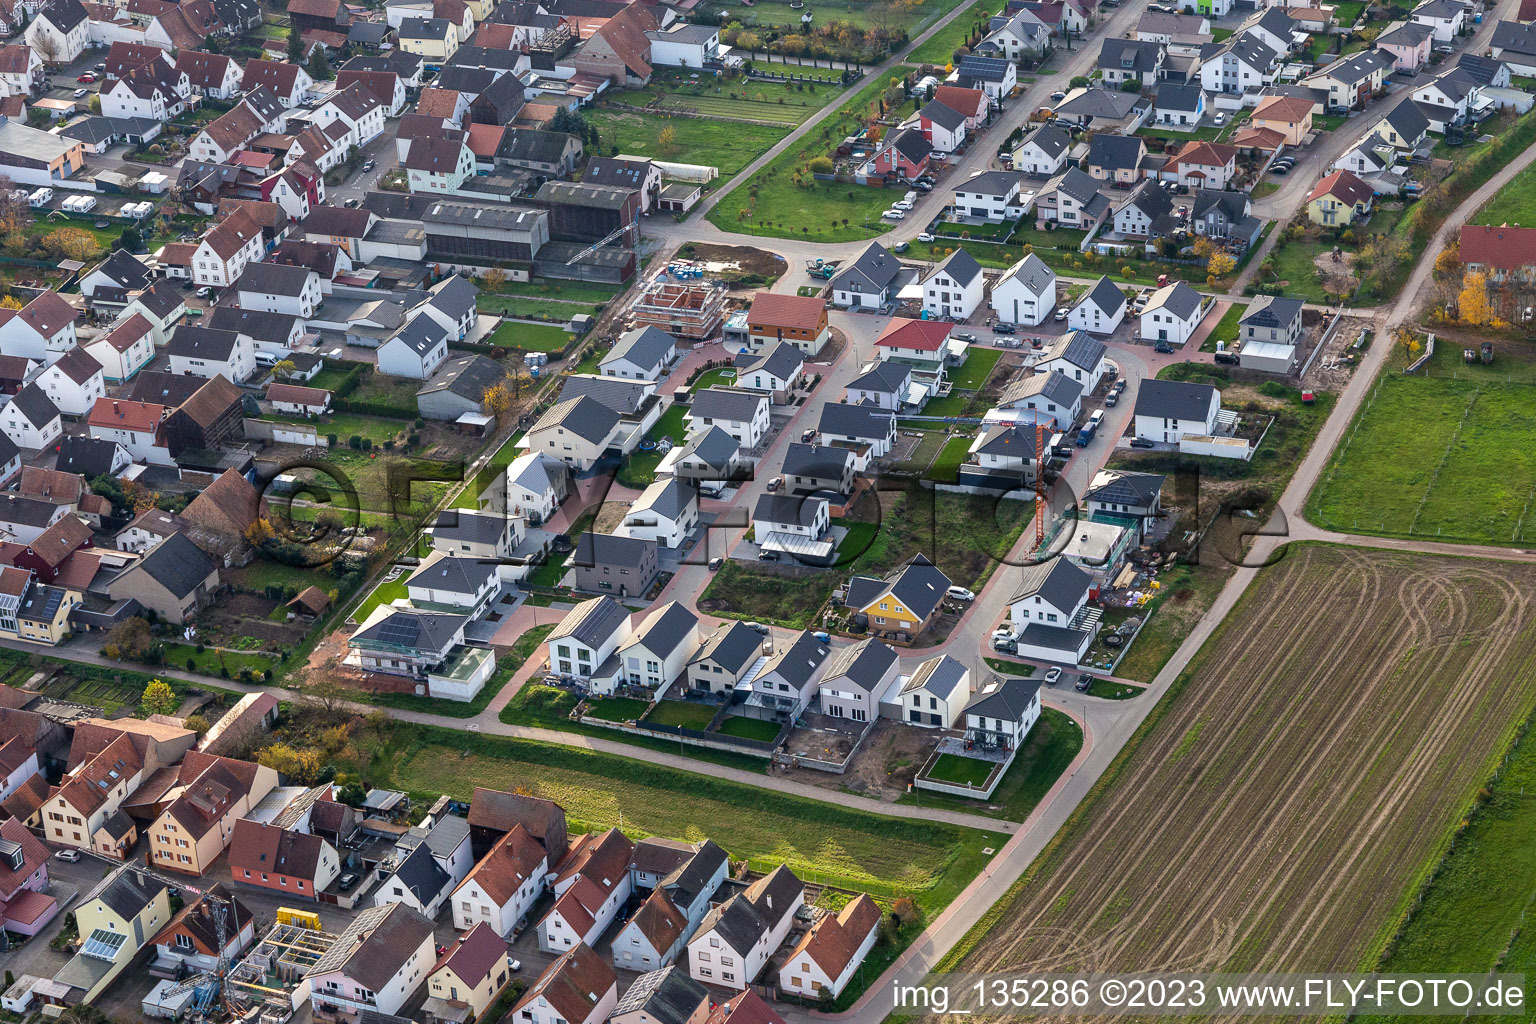 Oblique view of New development area in Sandblatt in Hatzenbühl in the state Rhineland-Palatinate, Germany